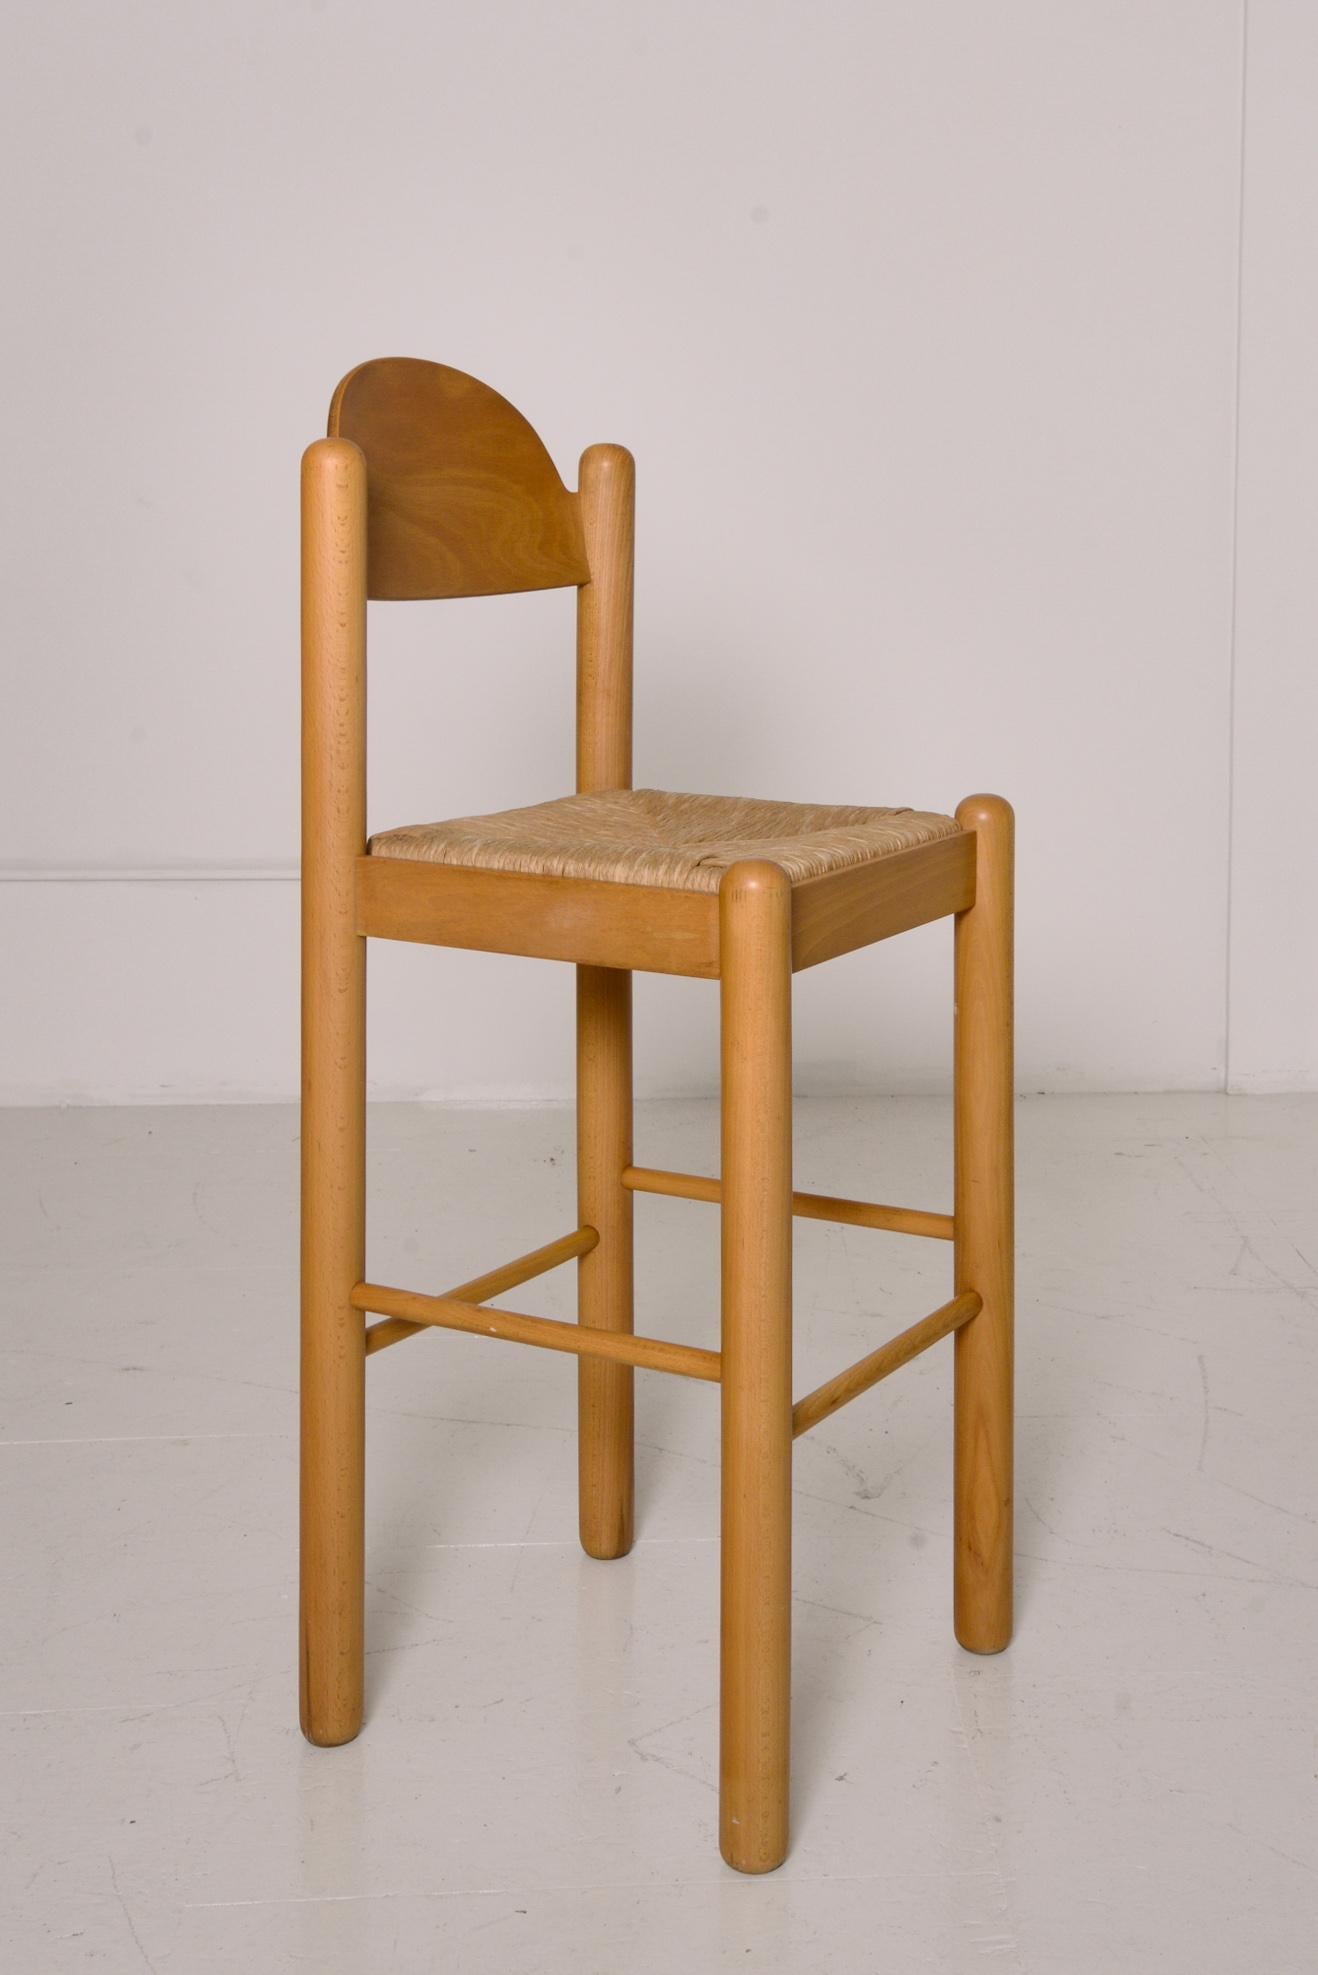 hank counter stool 2 pack